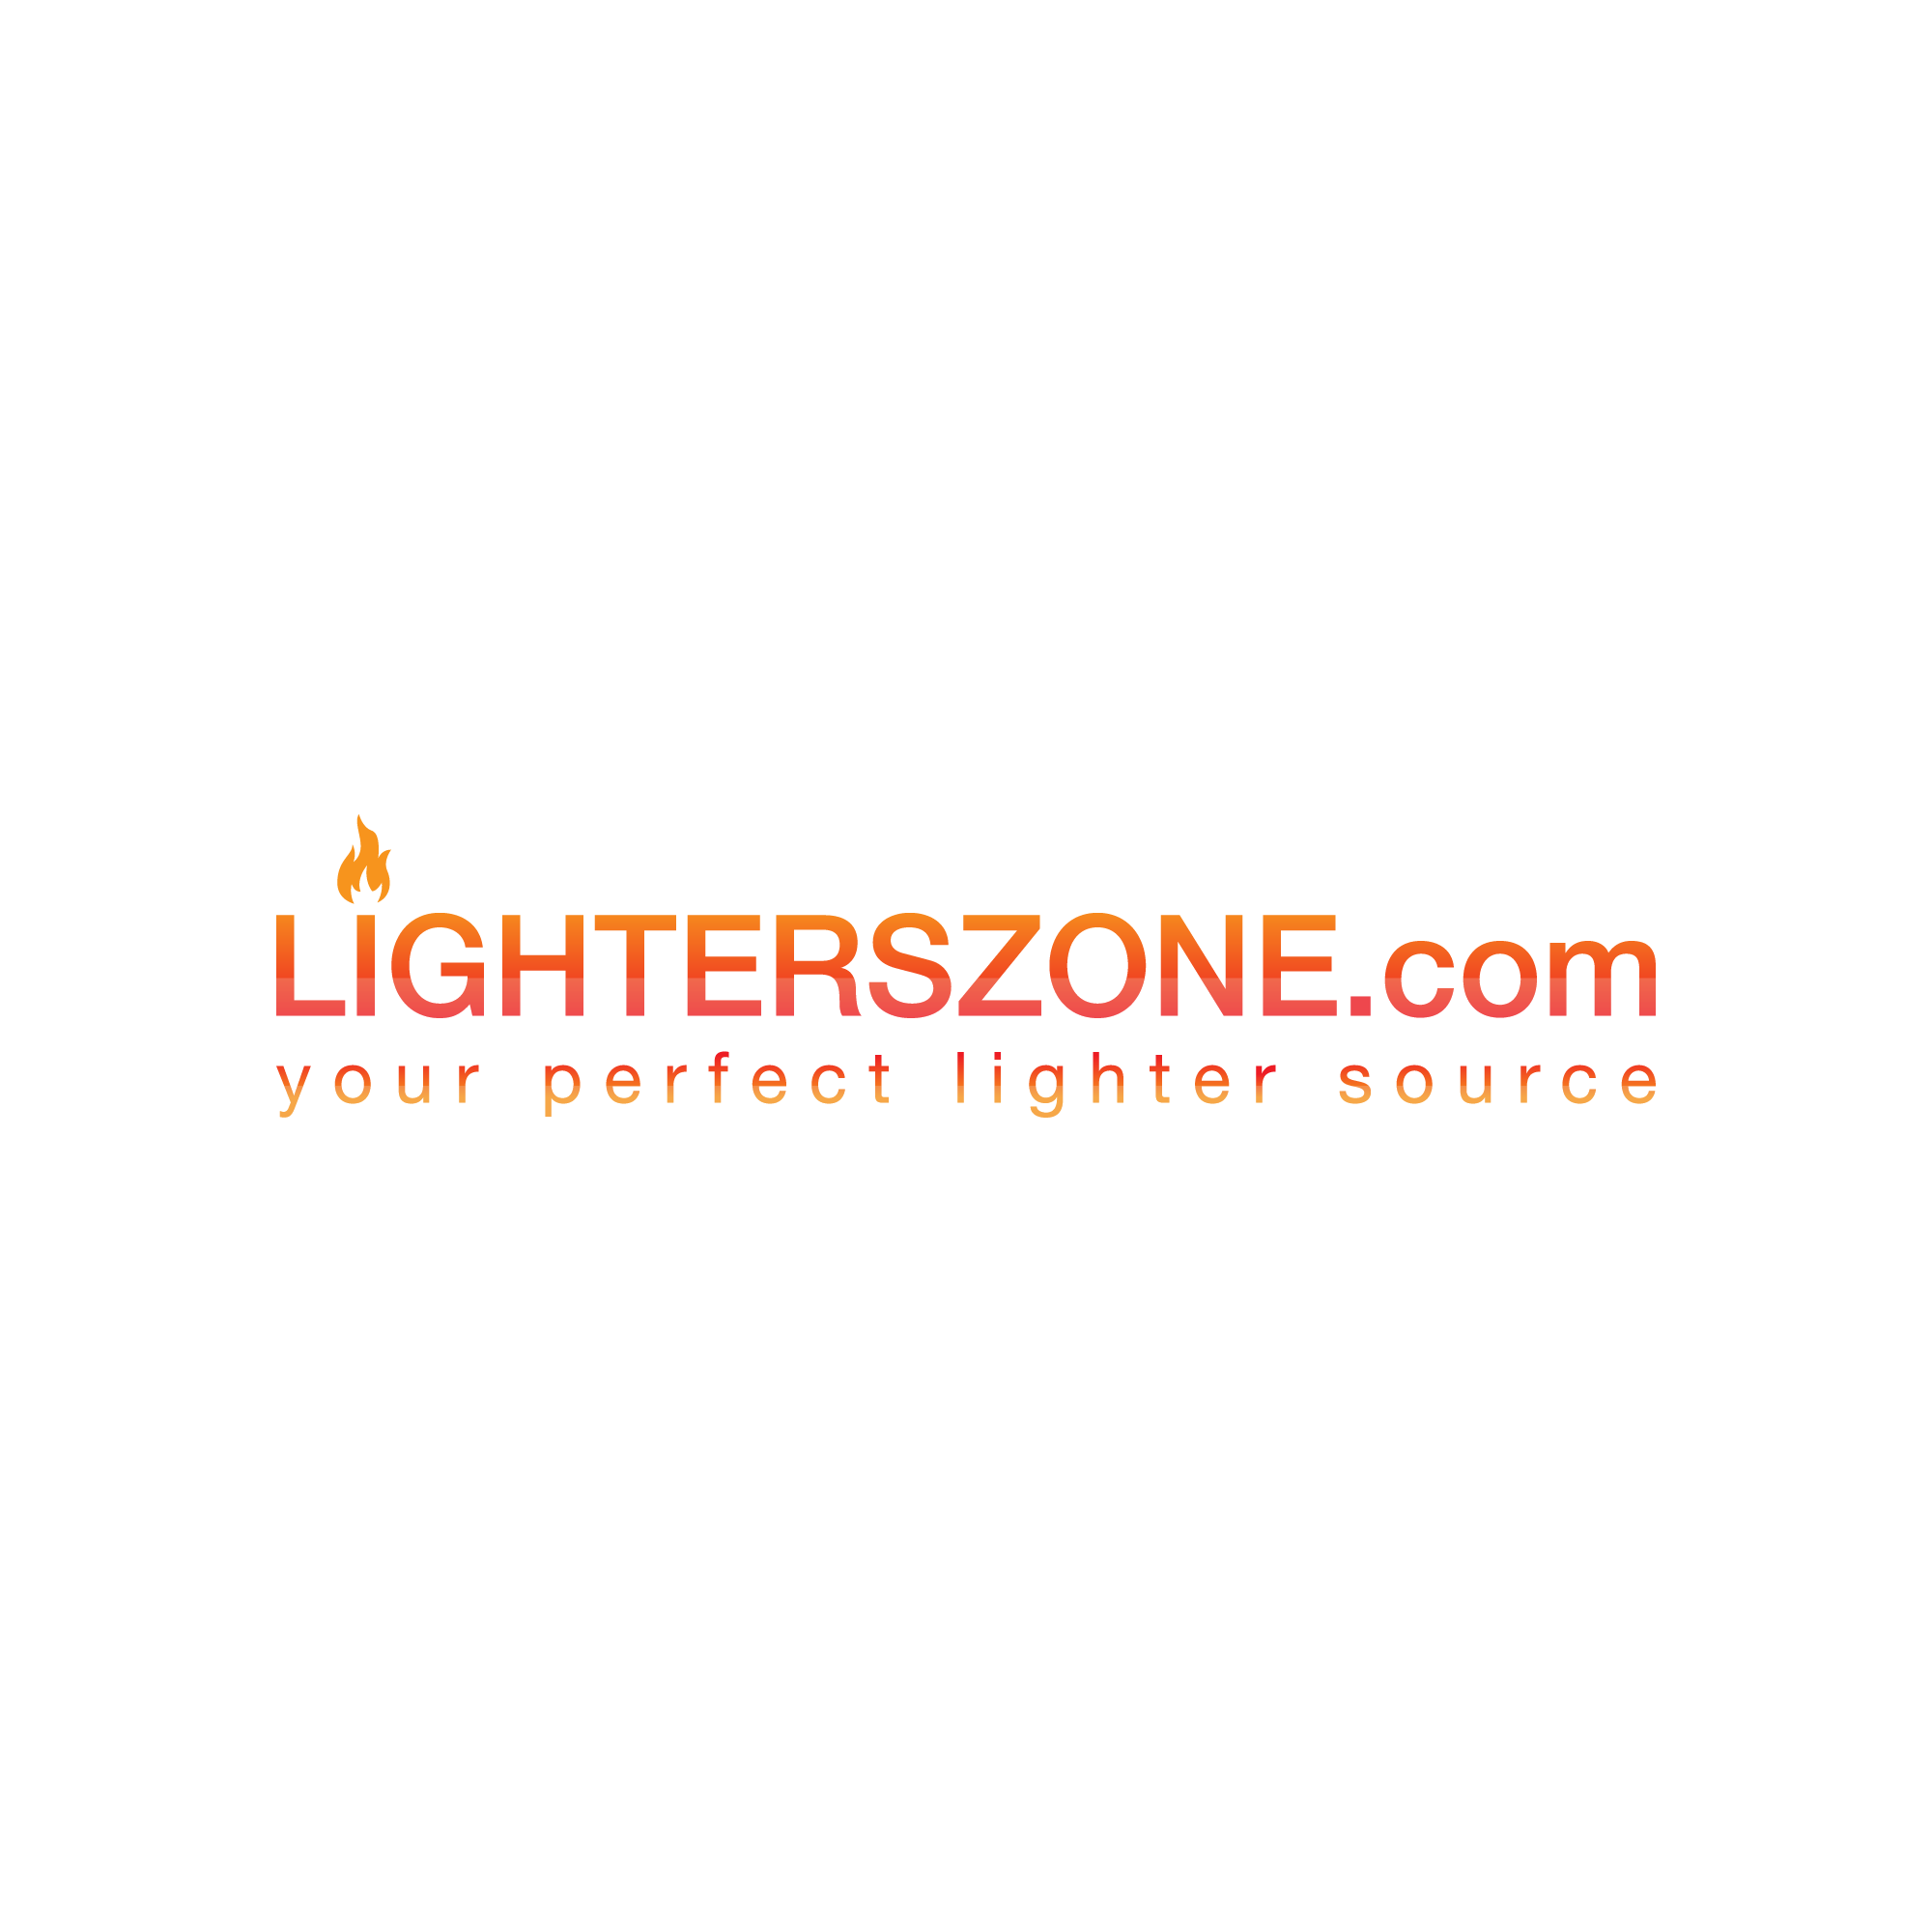 lighterszone.com